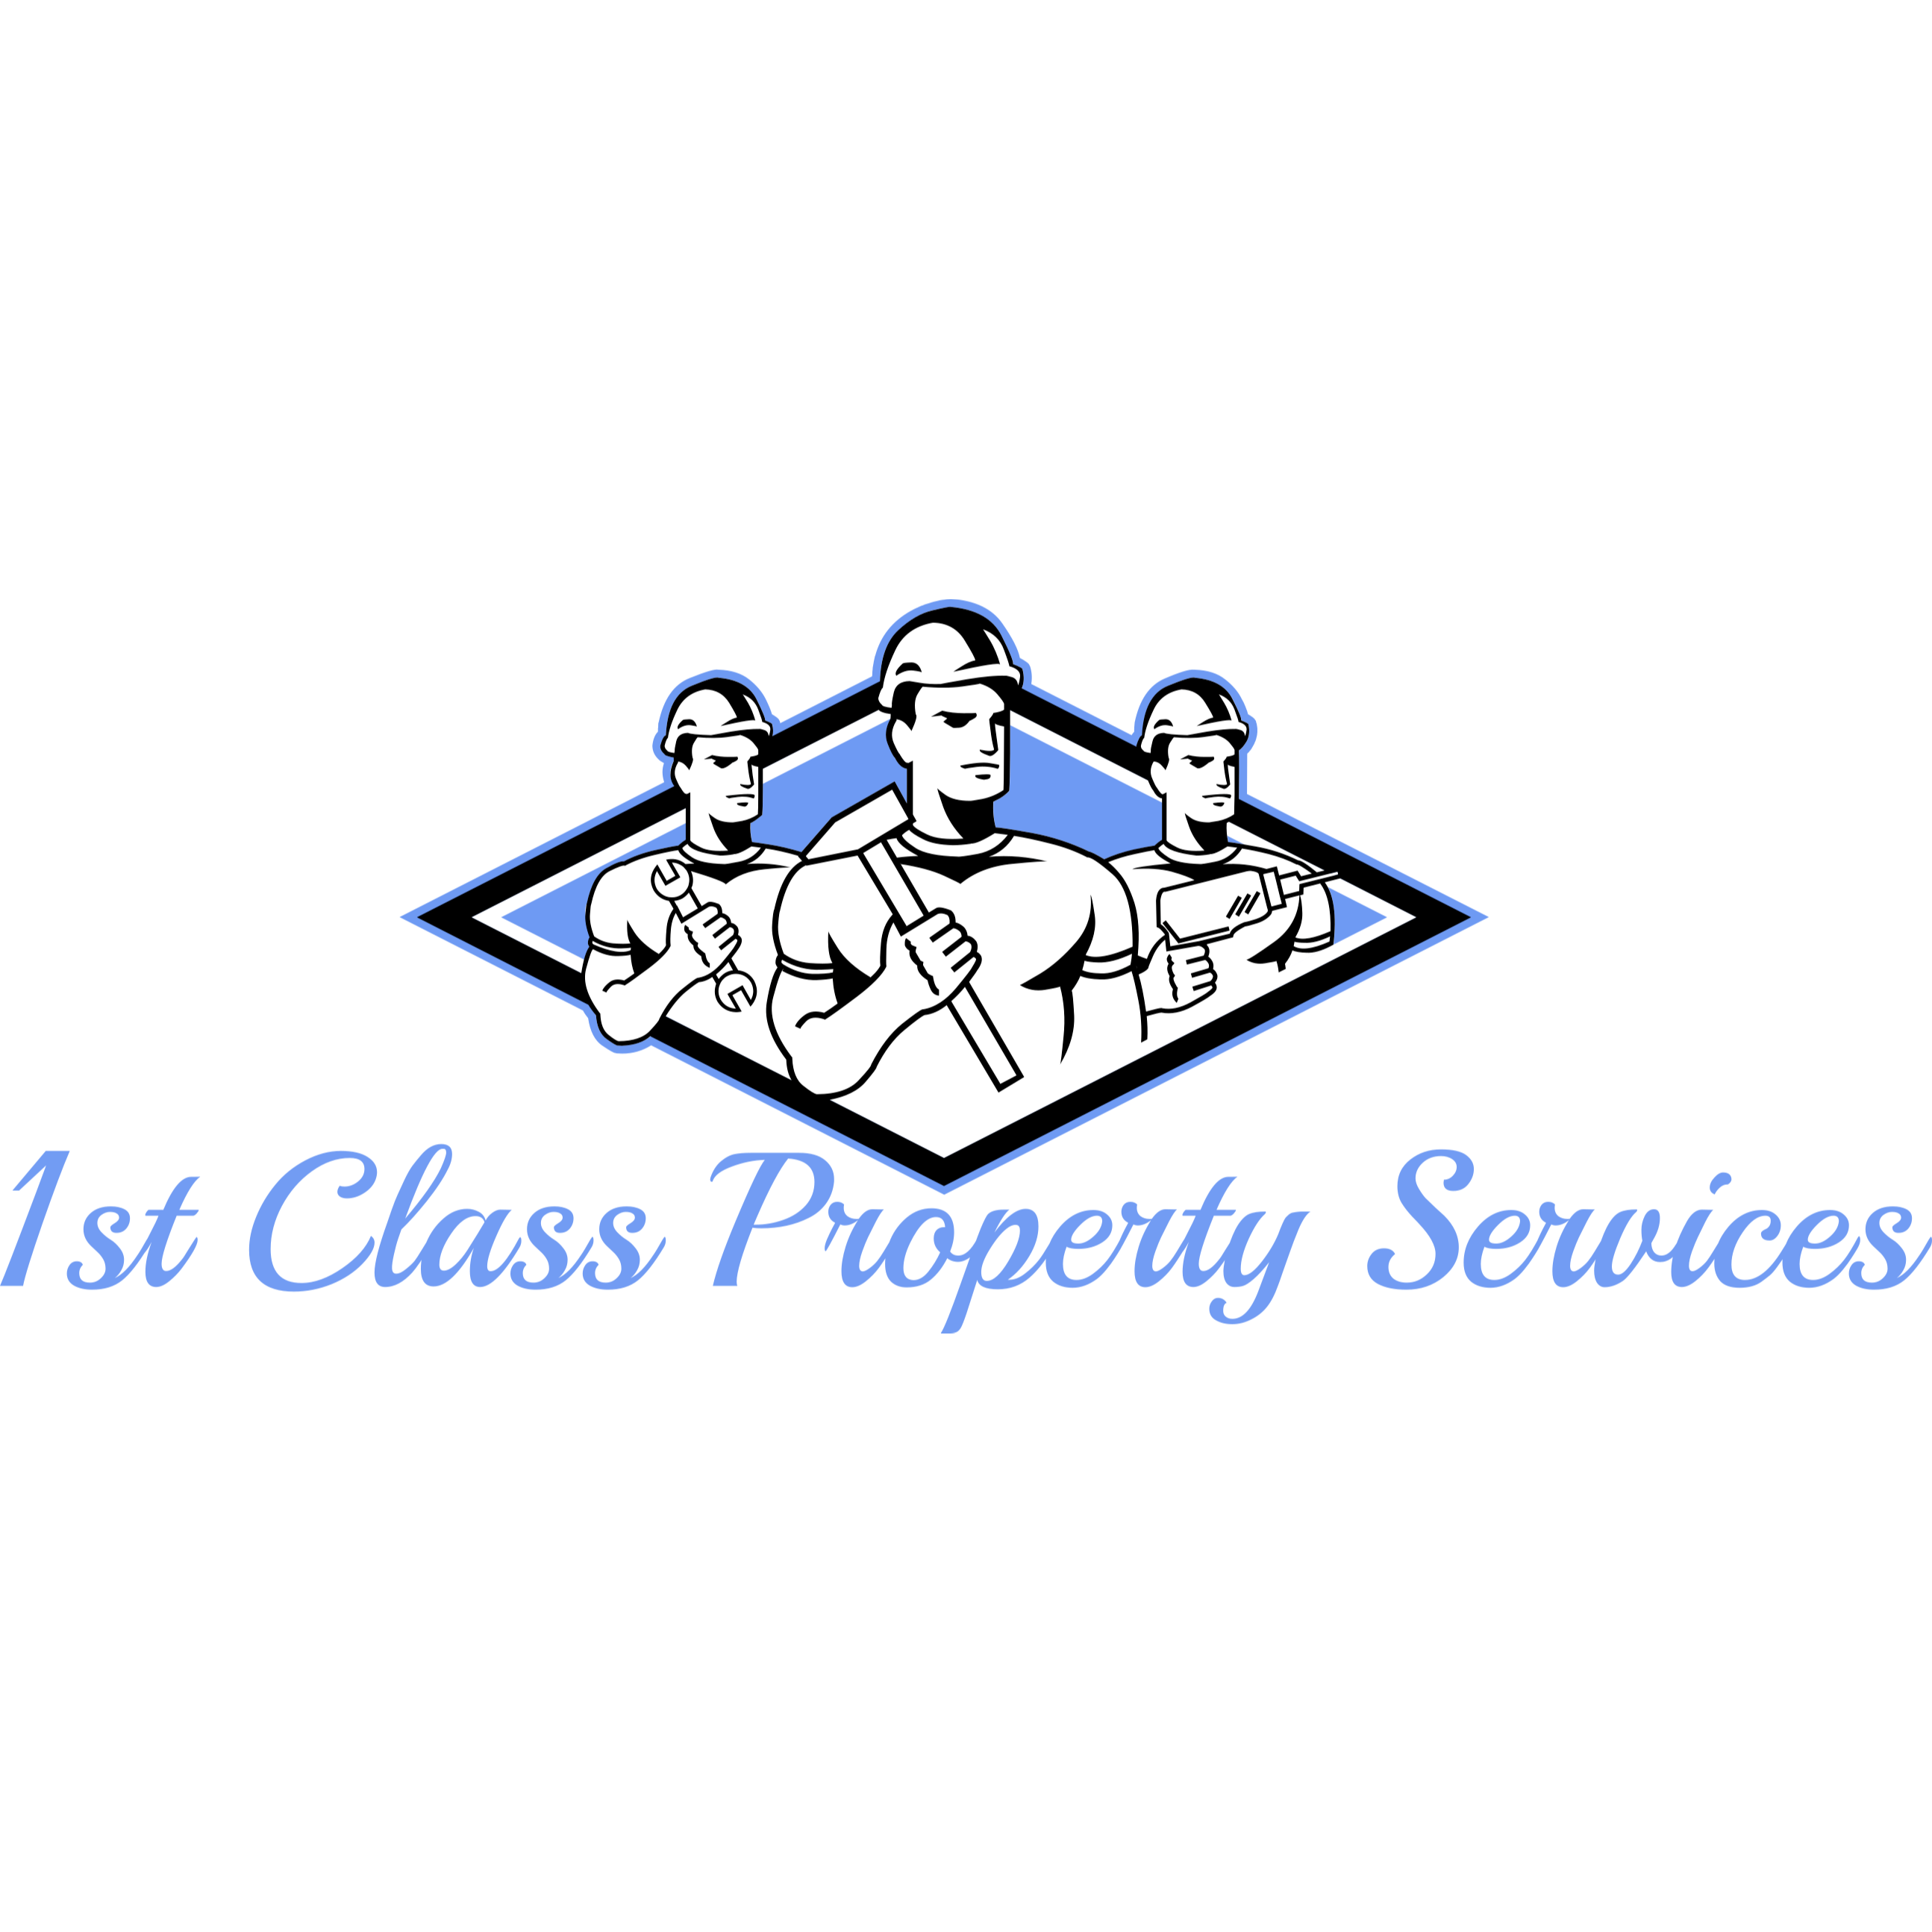 1st Class Property Services LLC - West Columbia, SC - (803)394-8895 | ShowMeLocal.com